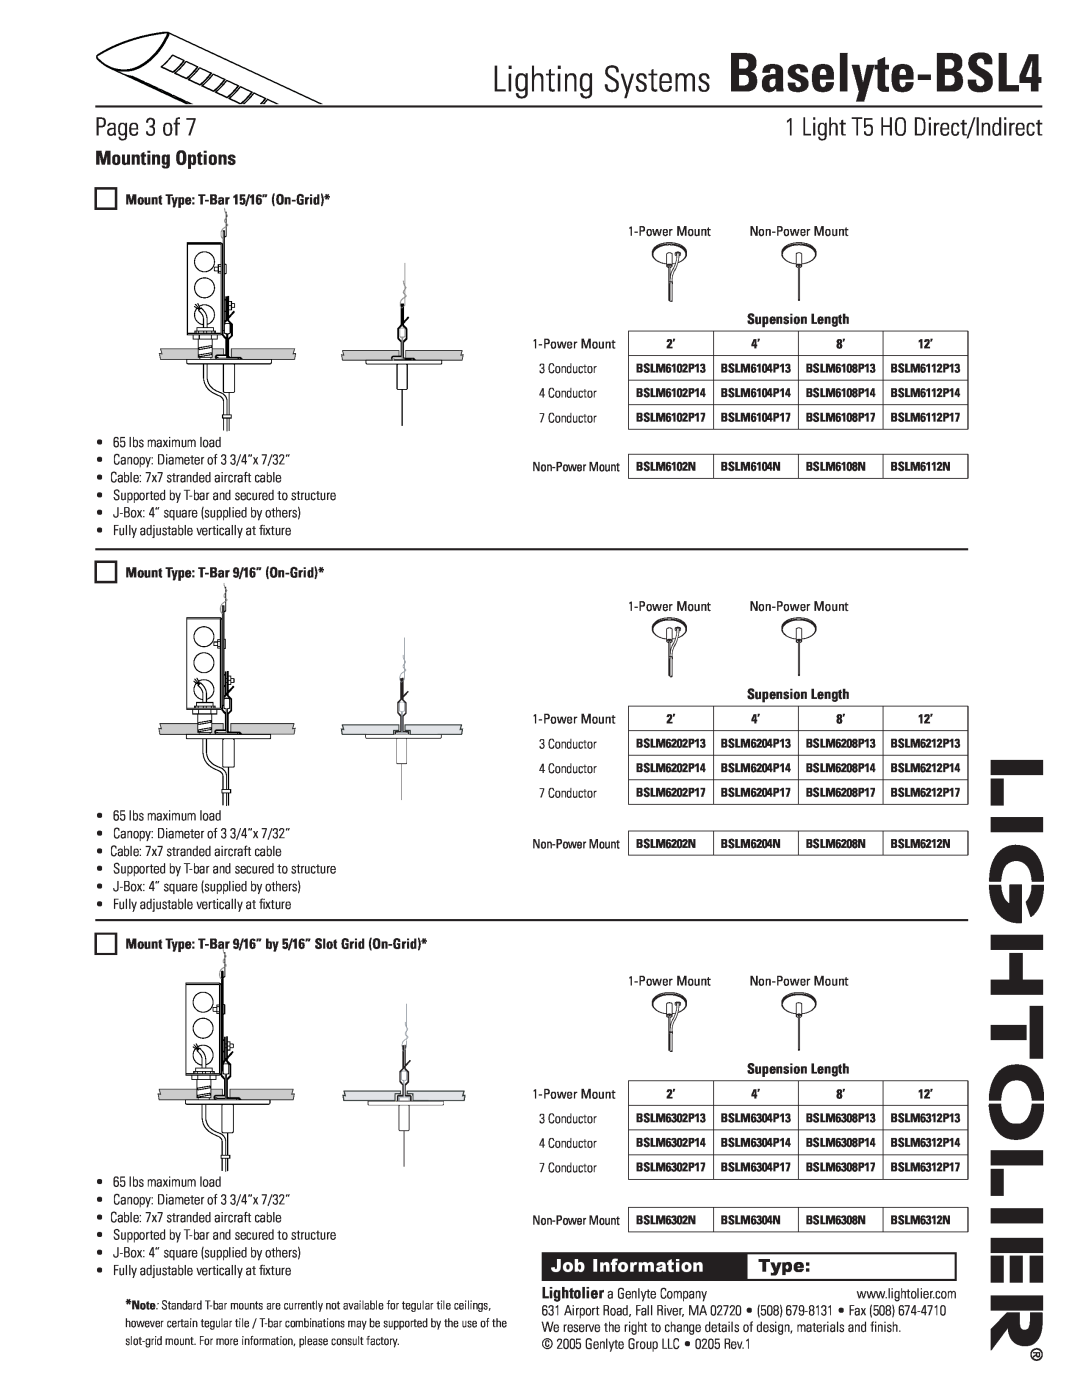 Lightolier Baselyte-BSL4 Mounting Options, Mount Type T-Bar15/16” On-Grid, Supension Length, Mount Type T-Bar9/16” On-Grid 